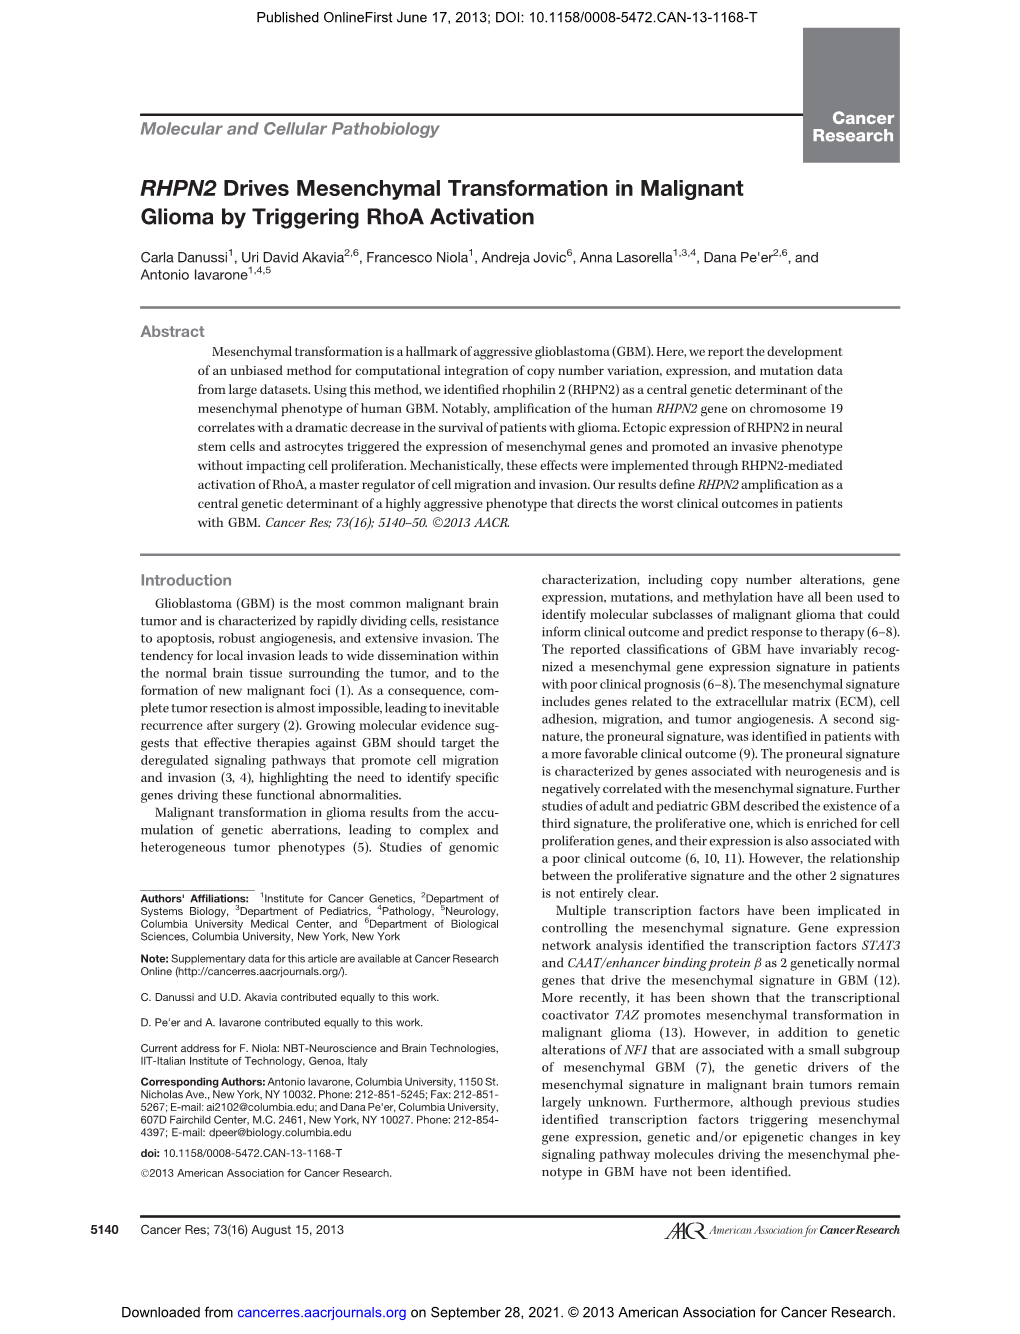 RHPN2 Drives Mesenchymal Transformation in Malignant Glioma by Triggering Rhoa Activation